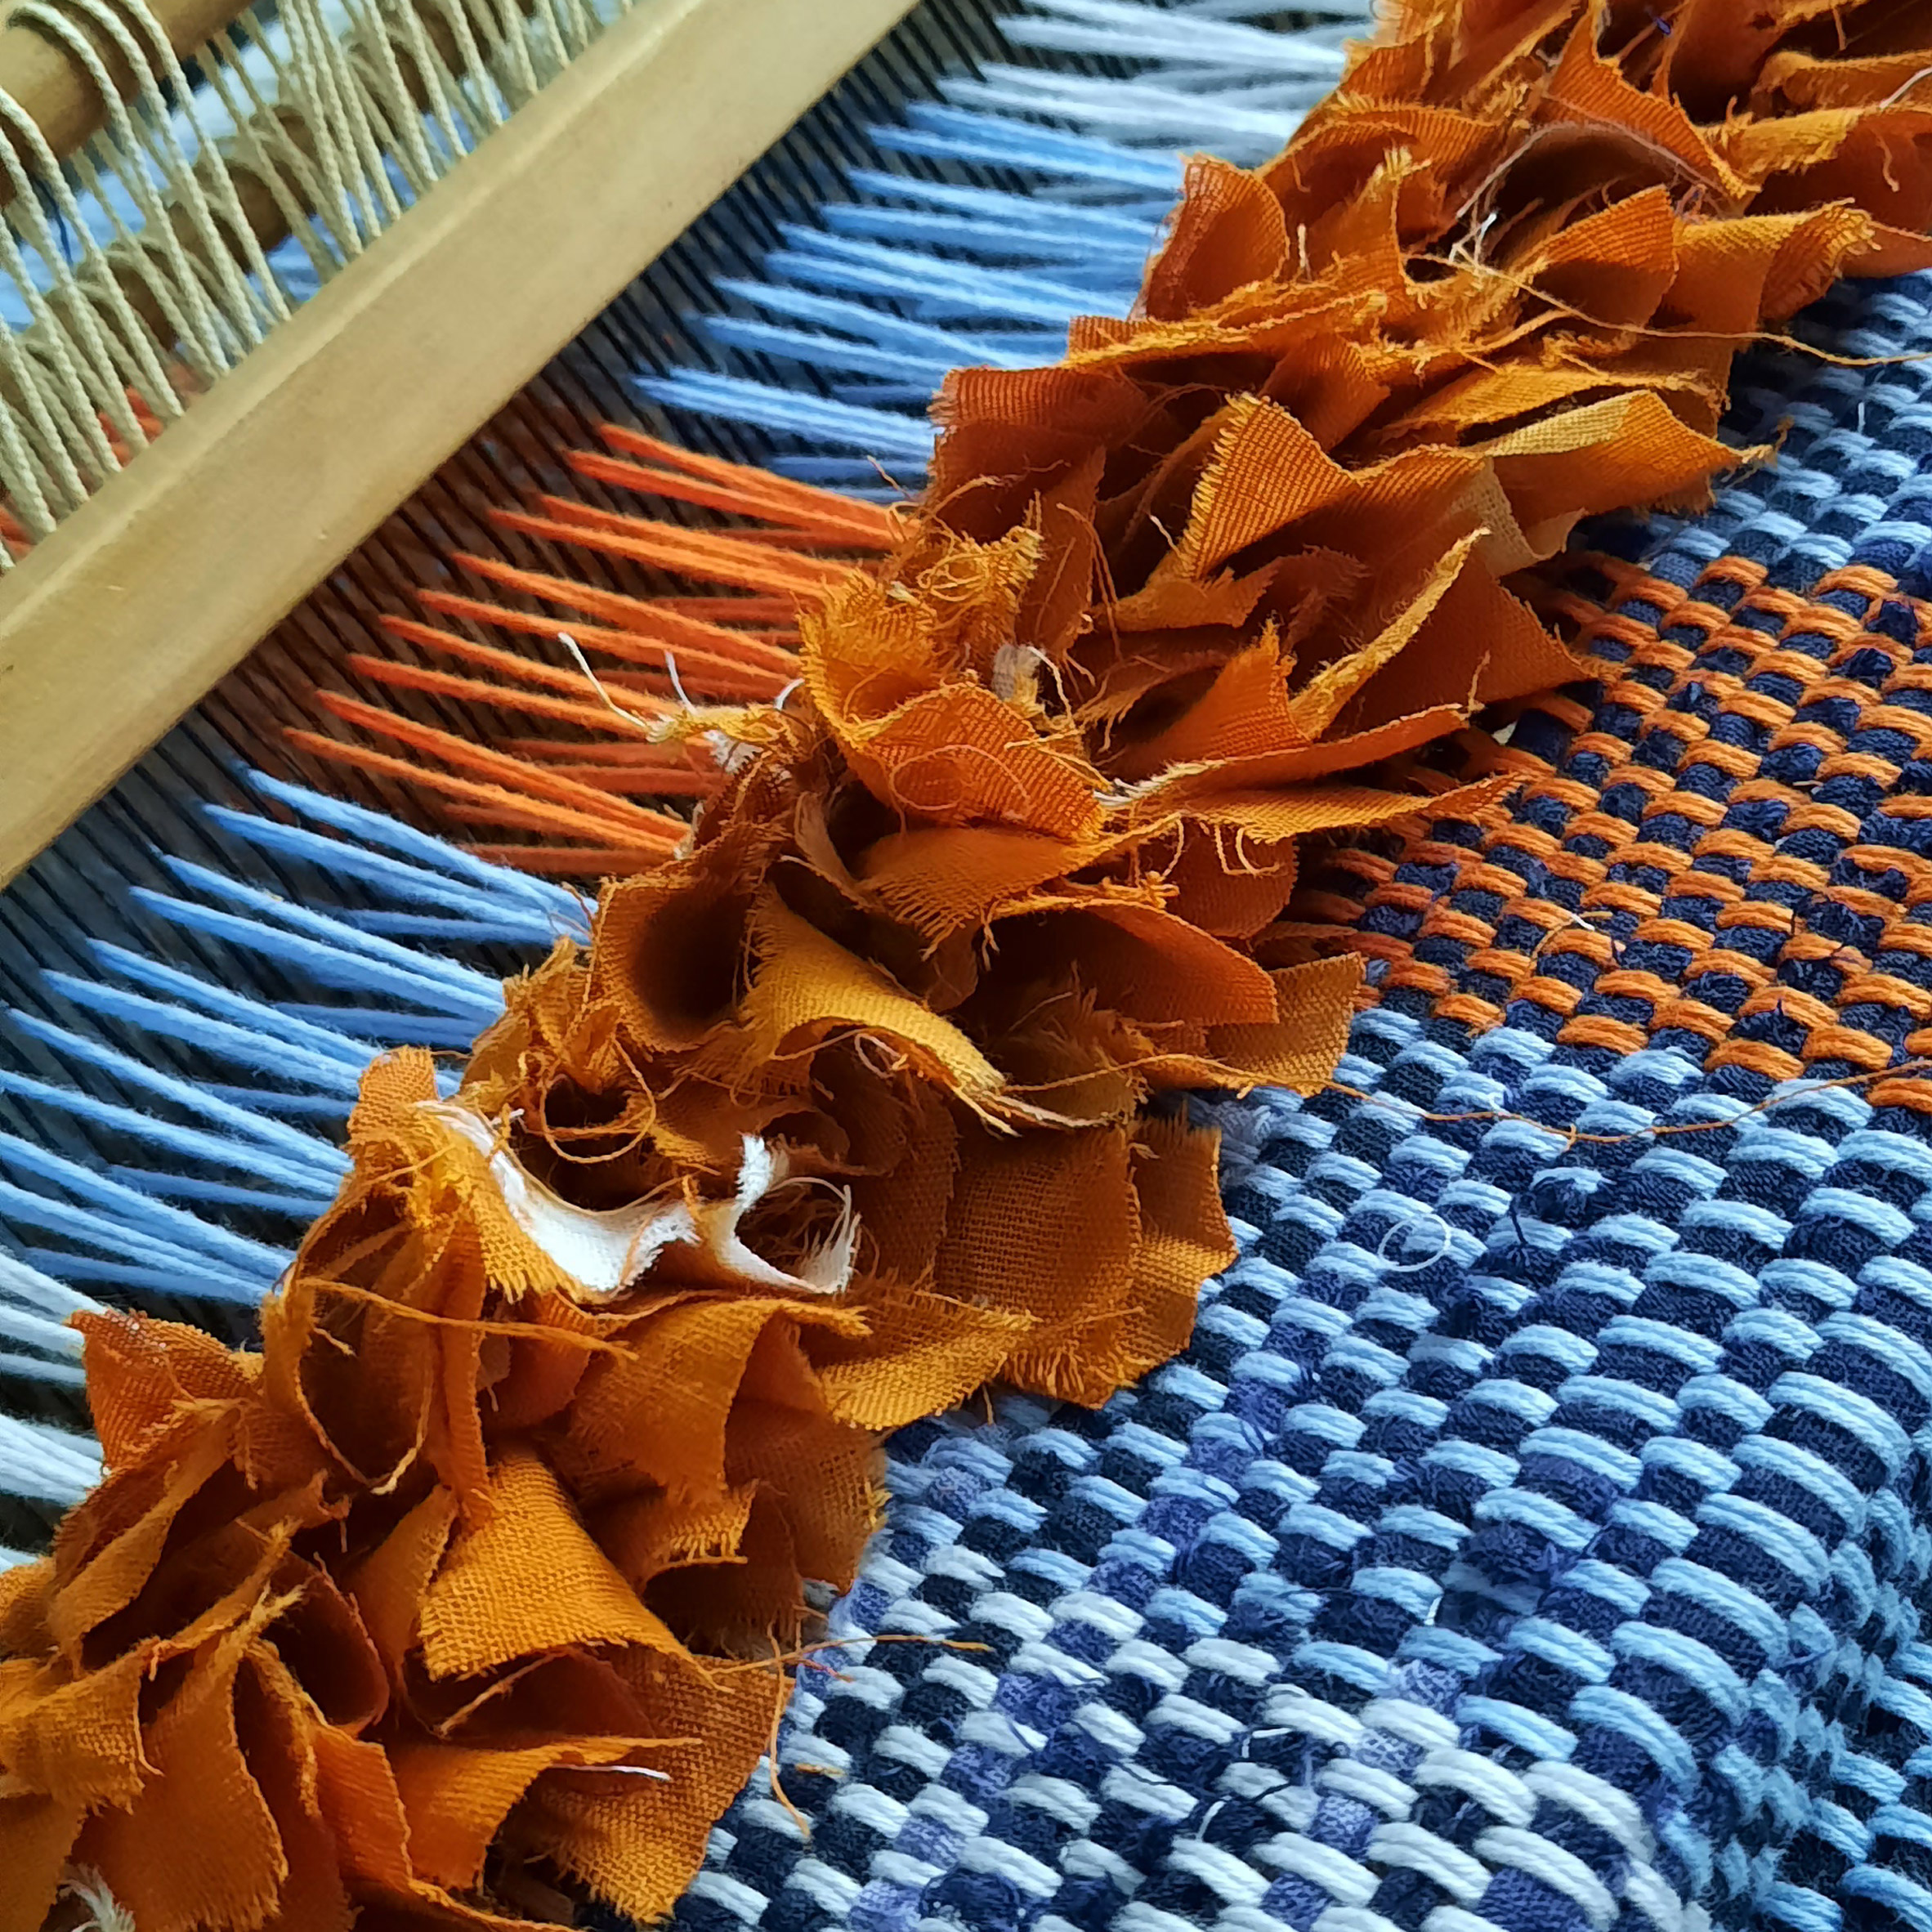 Close-up of Dakala Cloth weaving process by Nkwo Onwuka using blue and orange yarn